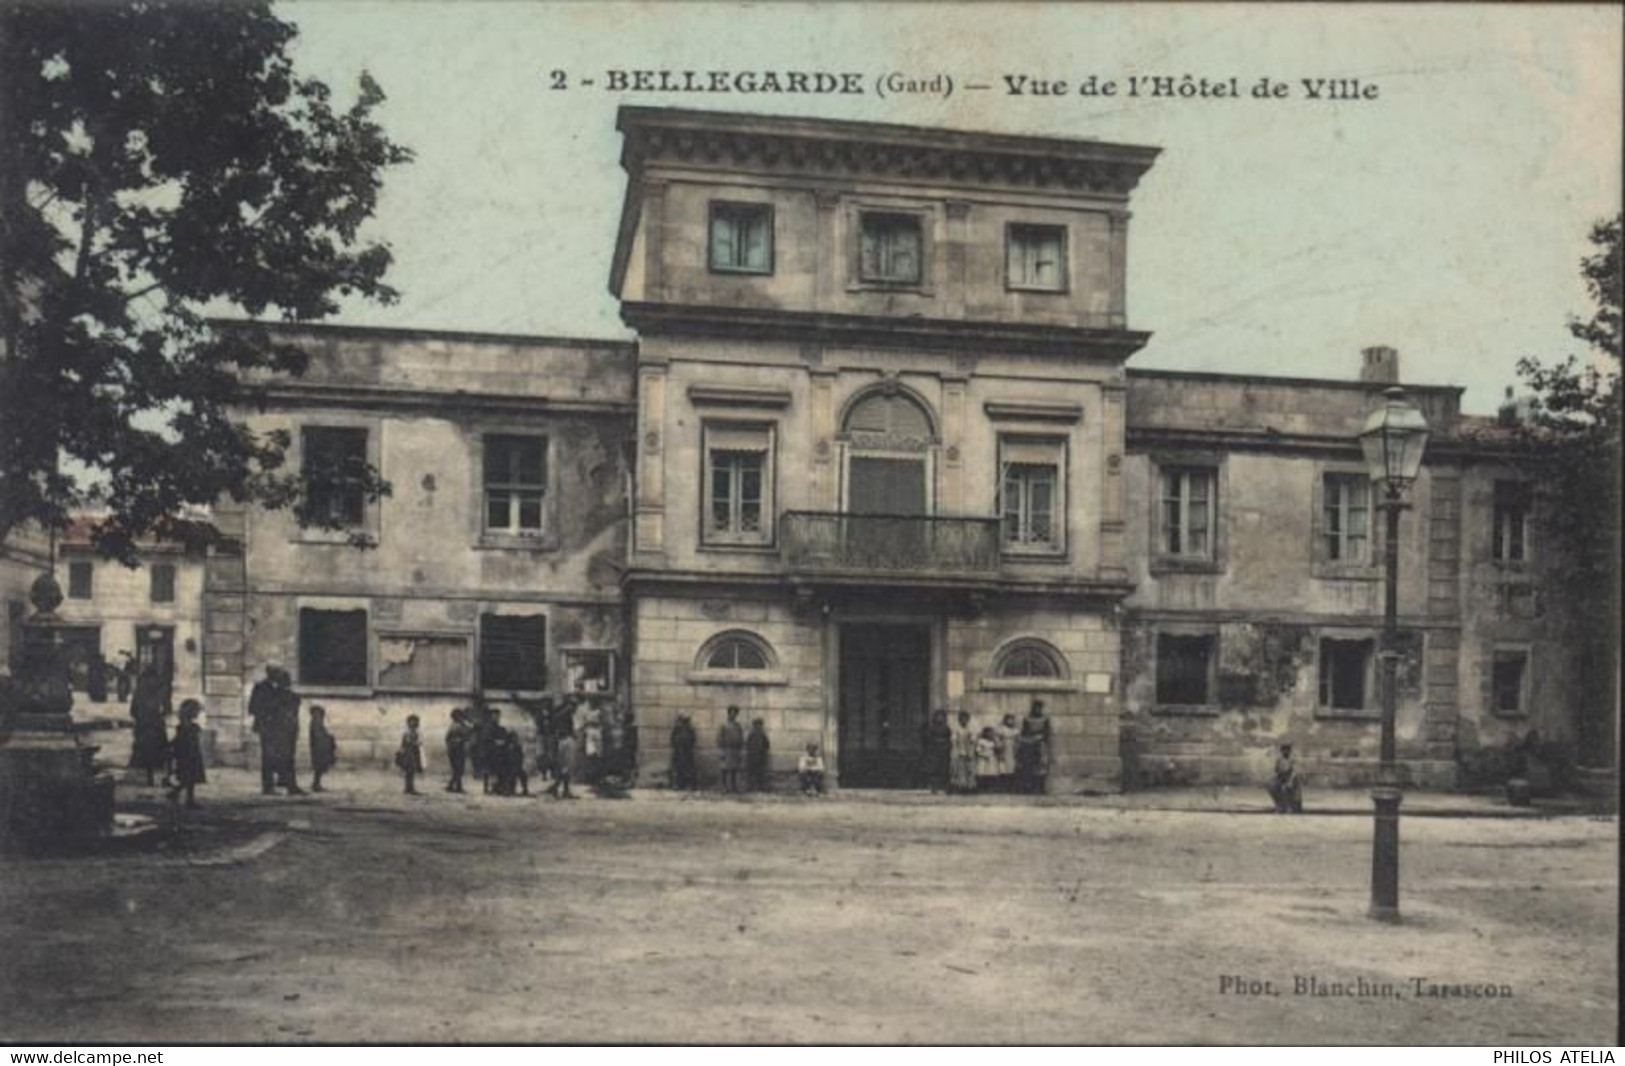 CPA CP Gard Bellegarde Vue De L'hôtel De Ville Phot Blanchin Tarascon YT 138 CAD Nimes 28 7 1909 - Bellegarde